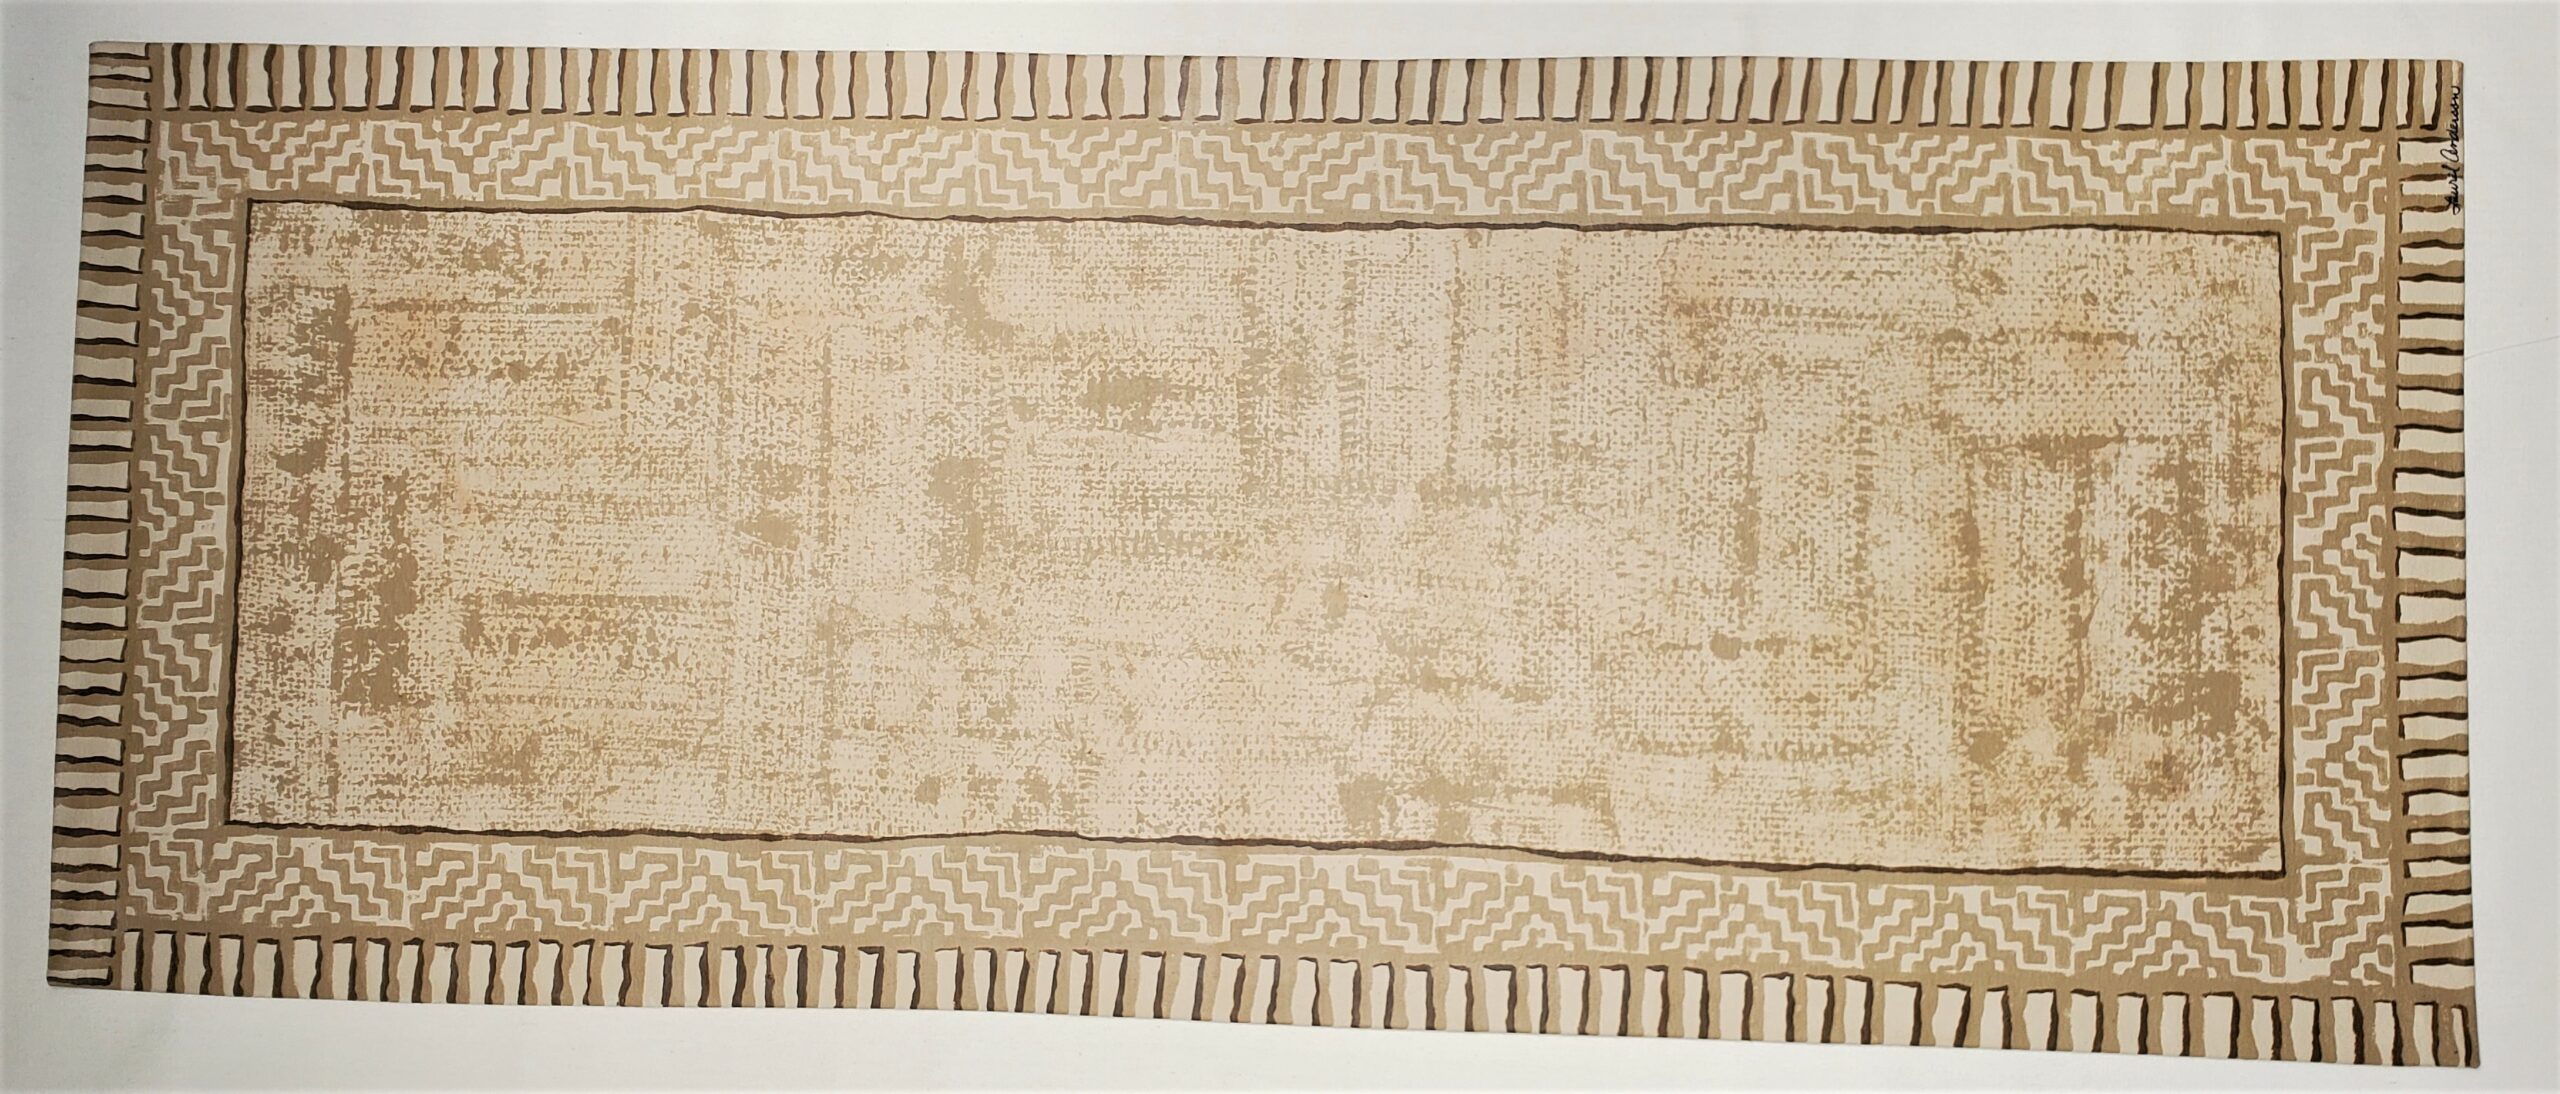 Handpainted canvas runner rug, neutral tones, natural fiber look, jute stamp, ethnic stamp borders